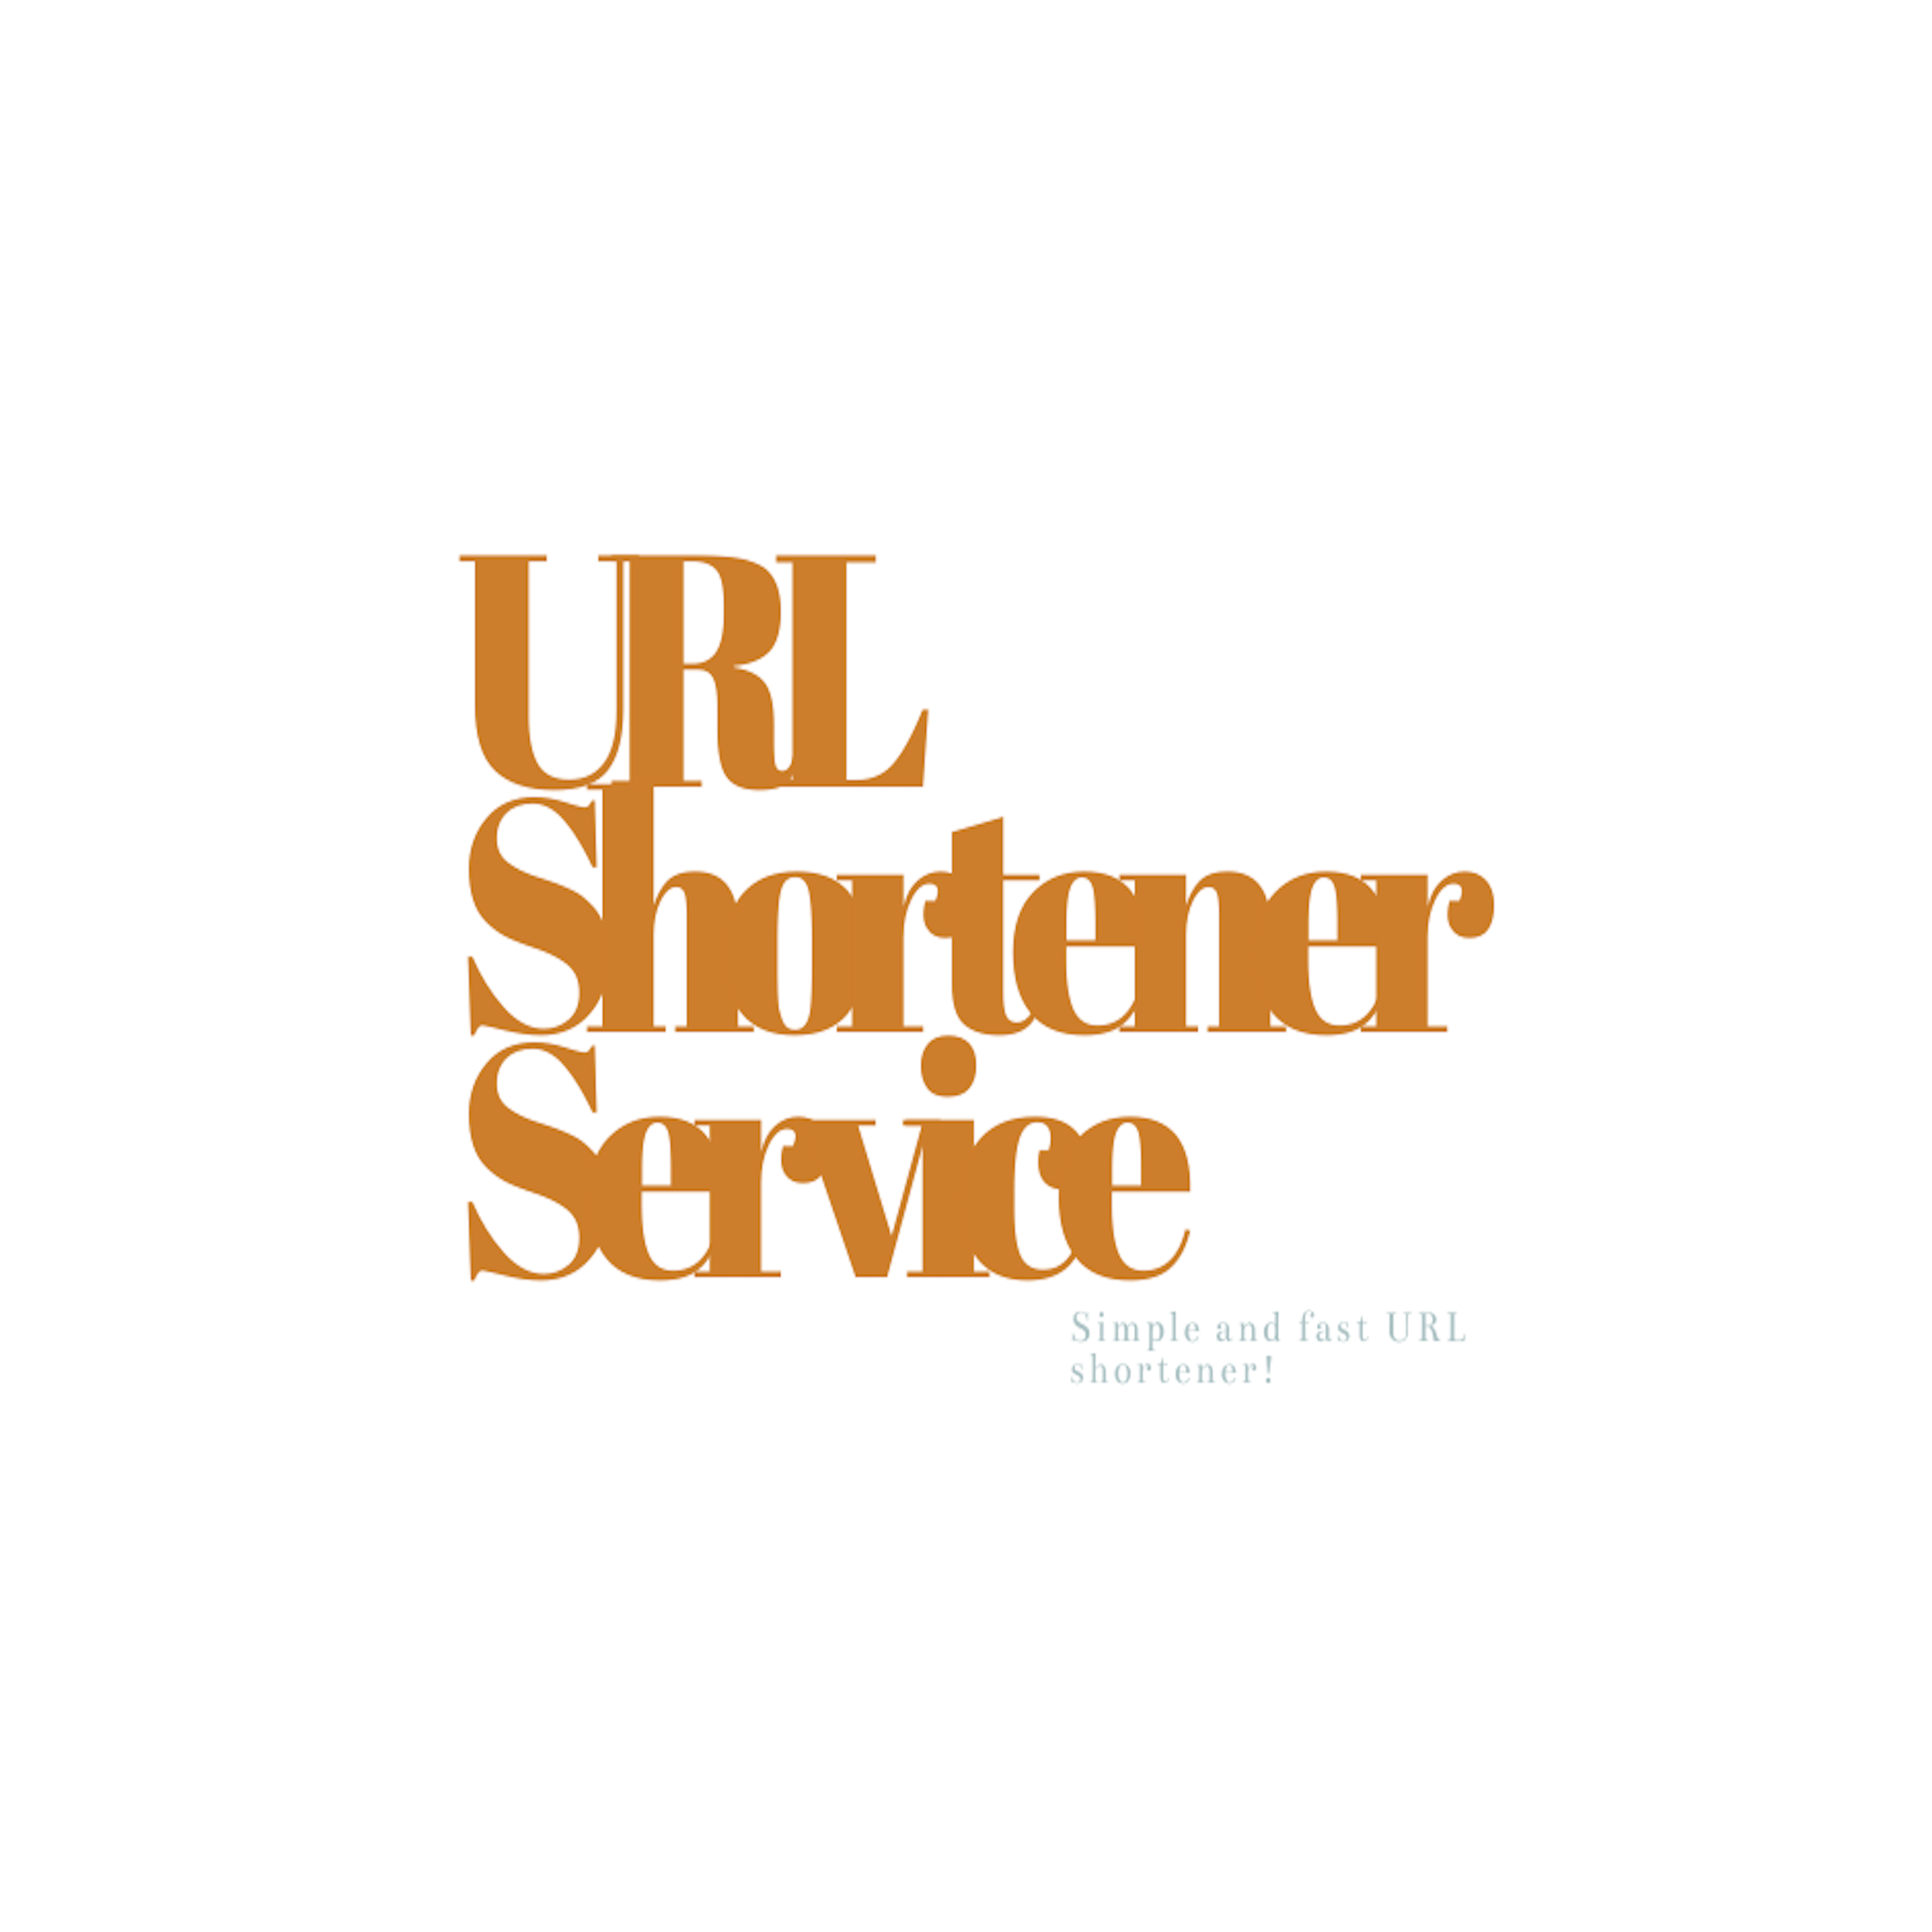 URL Shortener Service in Node Express